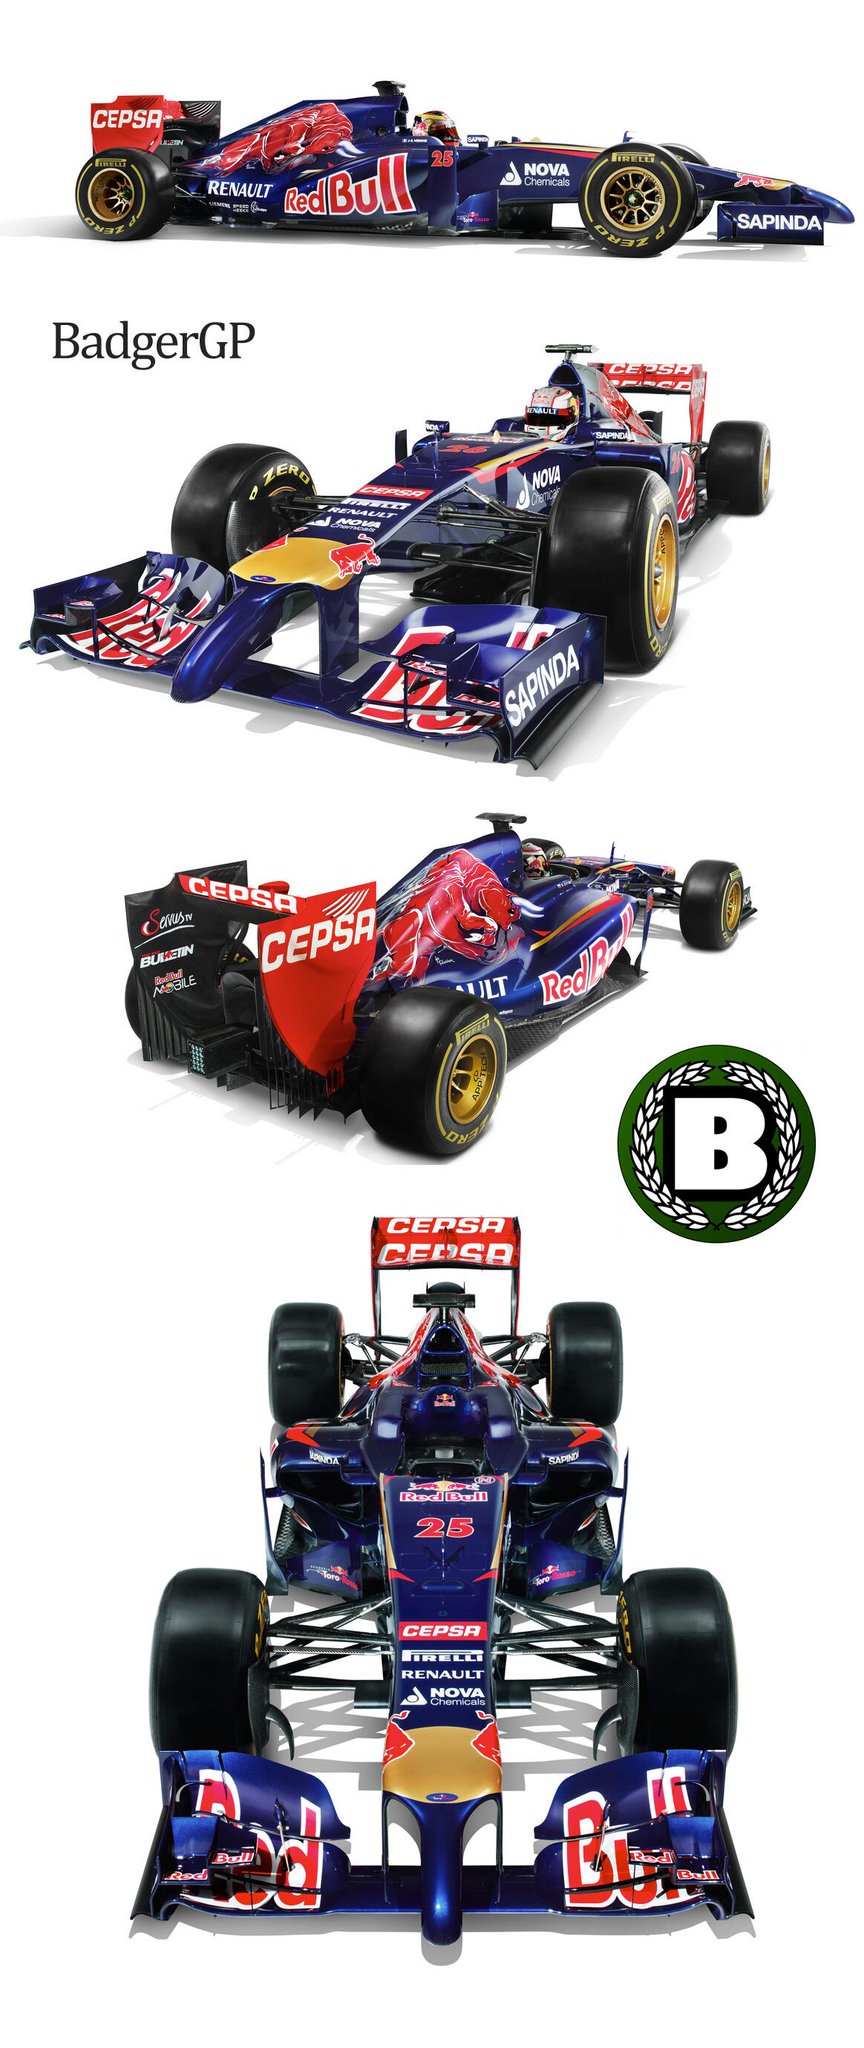  Formula 1 - 2014 / GP2 Series - Página 3 BfAPoJEIUAEozXj